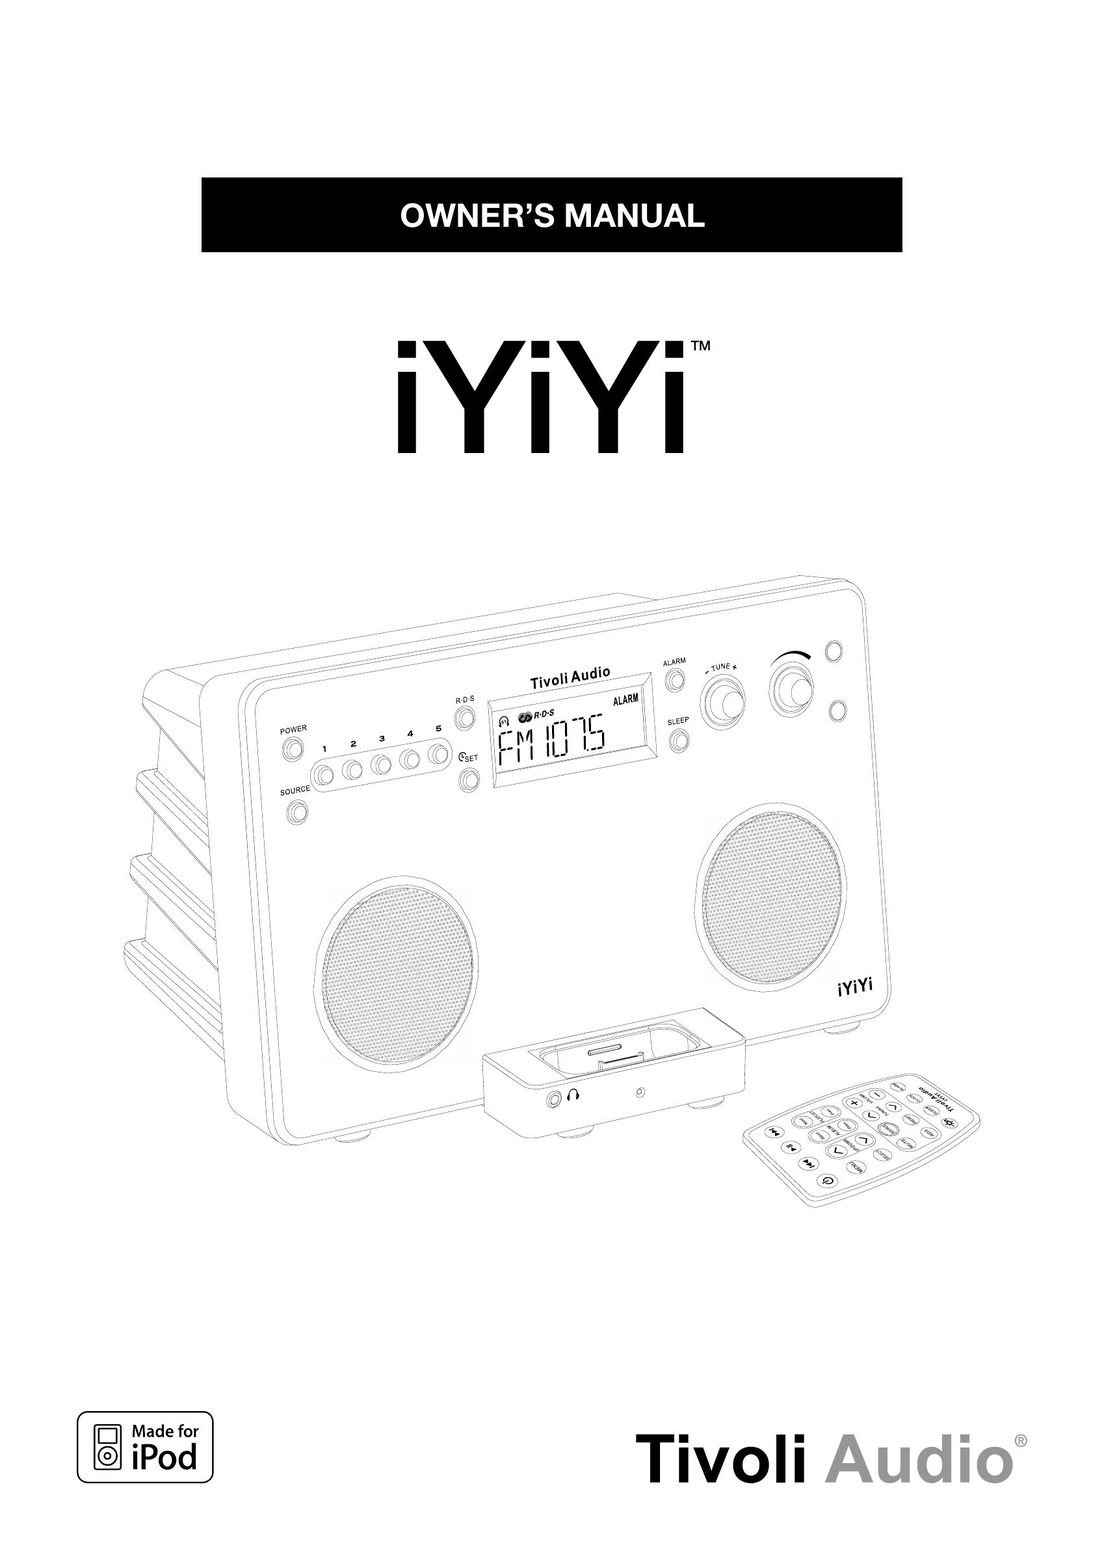 Tivoli Audio IYIYI MP3 Docking Station User Manual